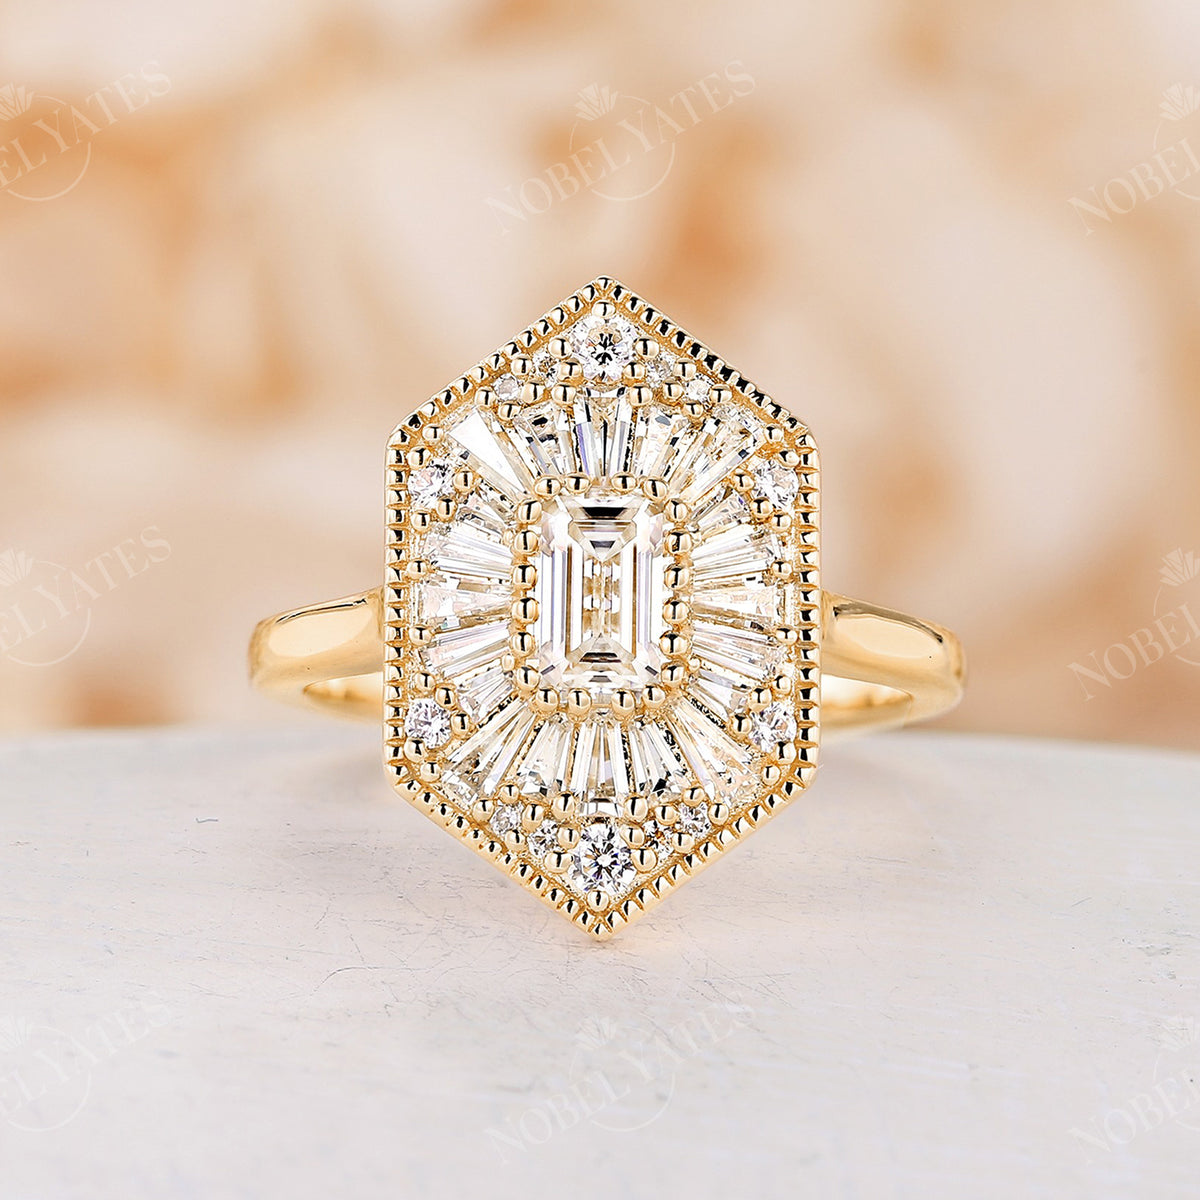 Cluster Art Deco Emerald Moissanite Engagement Ring Rose Gold